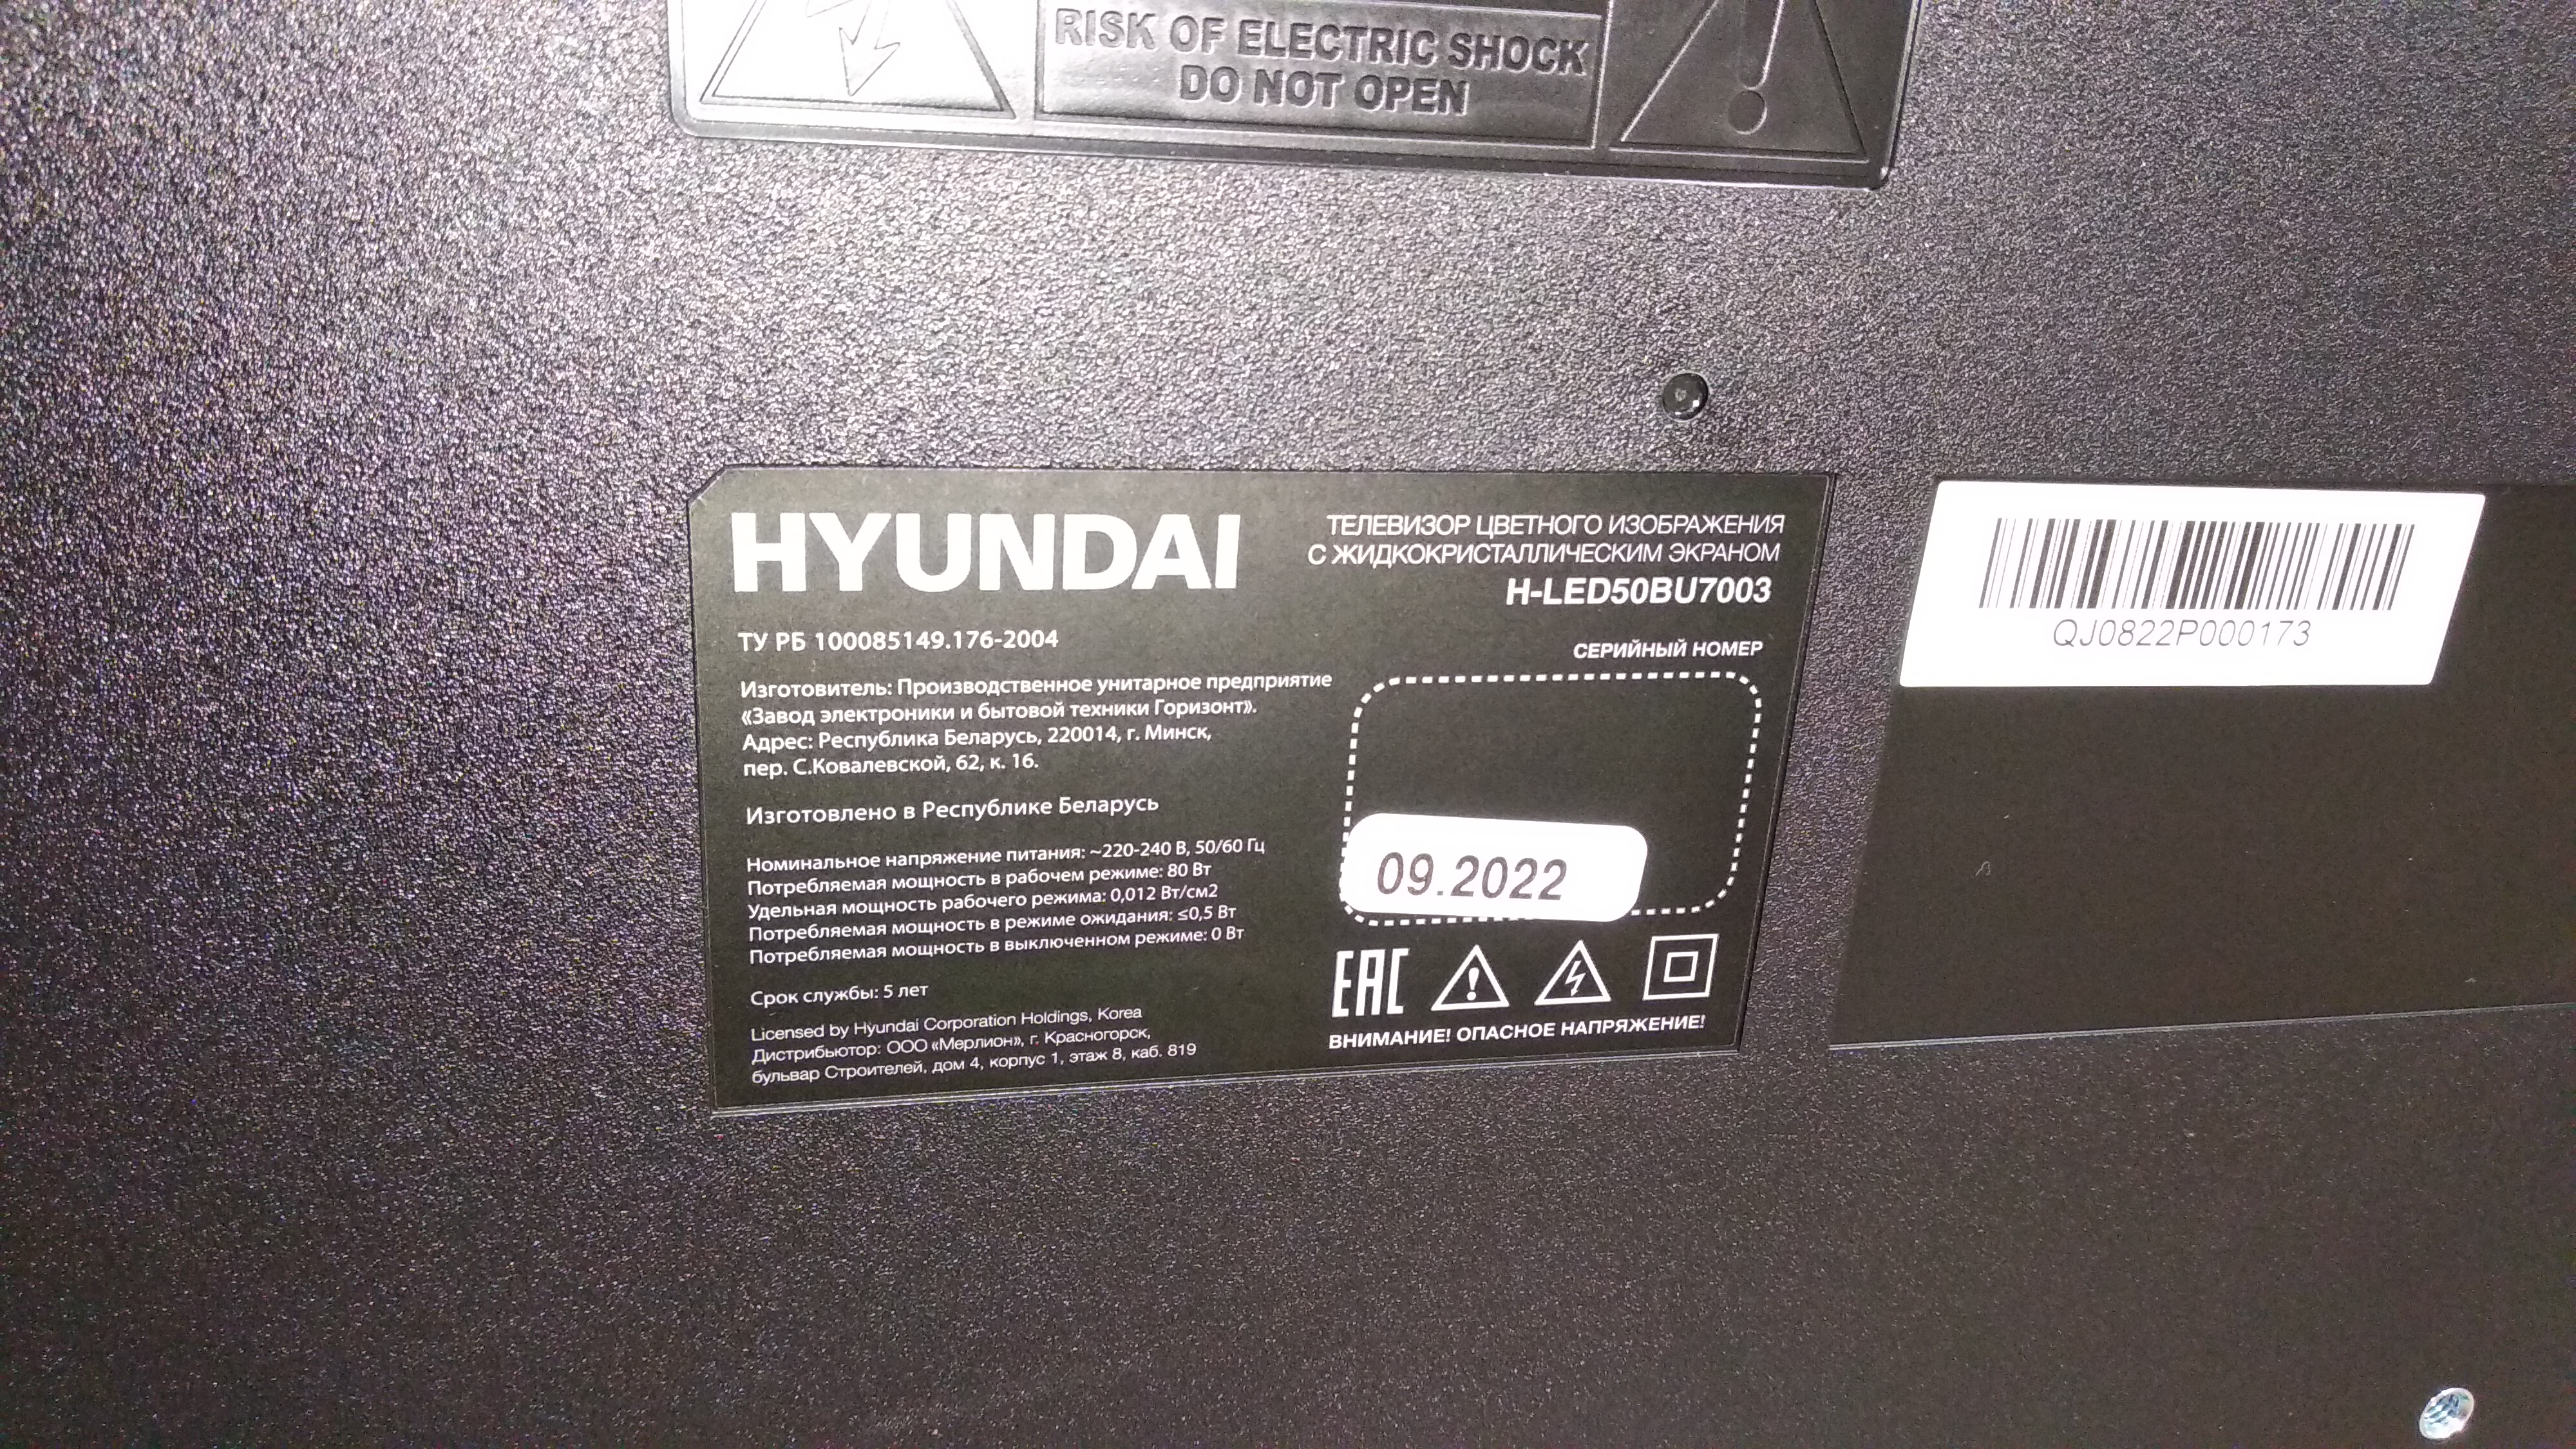 Led43bu7003 телевизор hyundai. Телевизор Hyundai 50 h-led50bu7003 как включить Miracast. Hyundai h-led50bu7003 50 угол обзора фото.